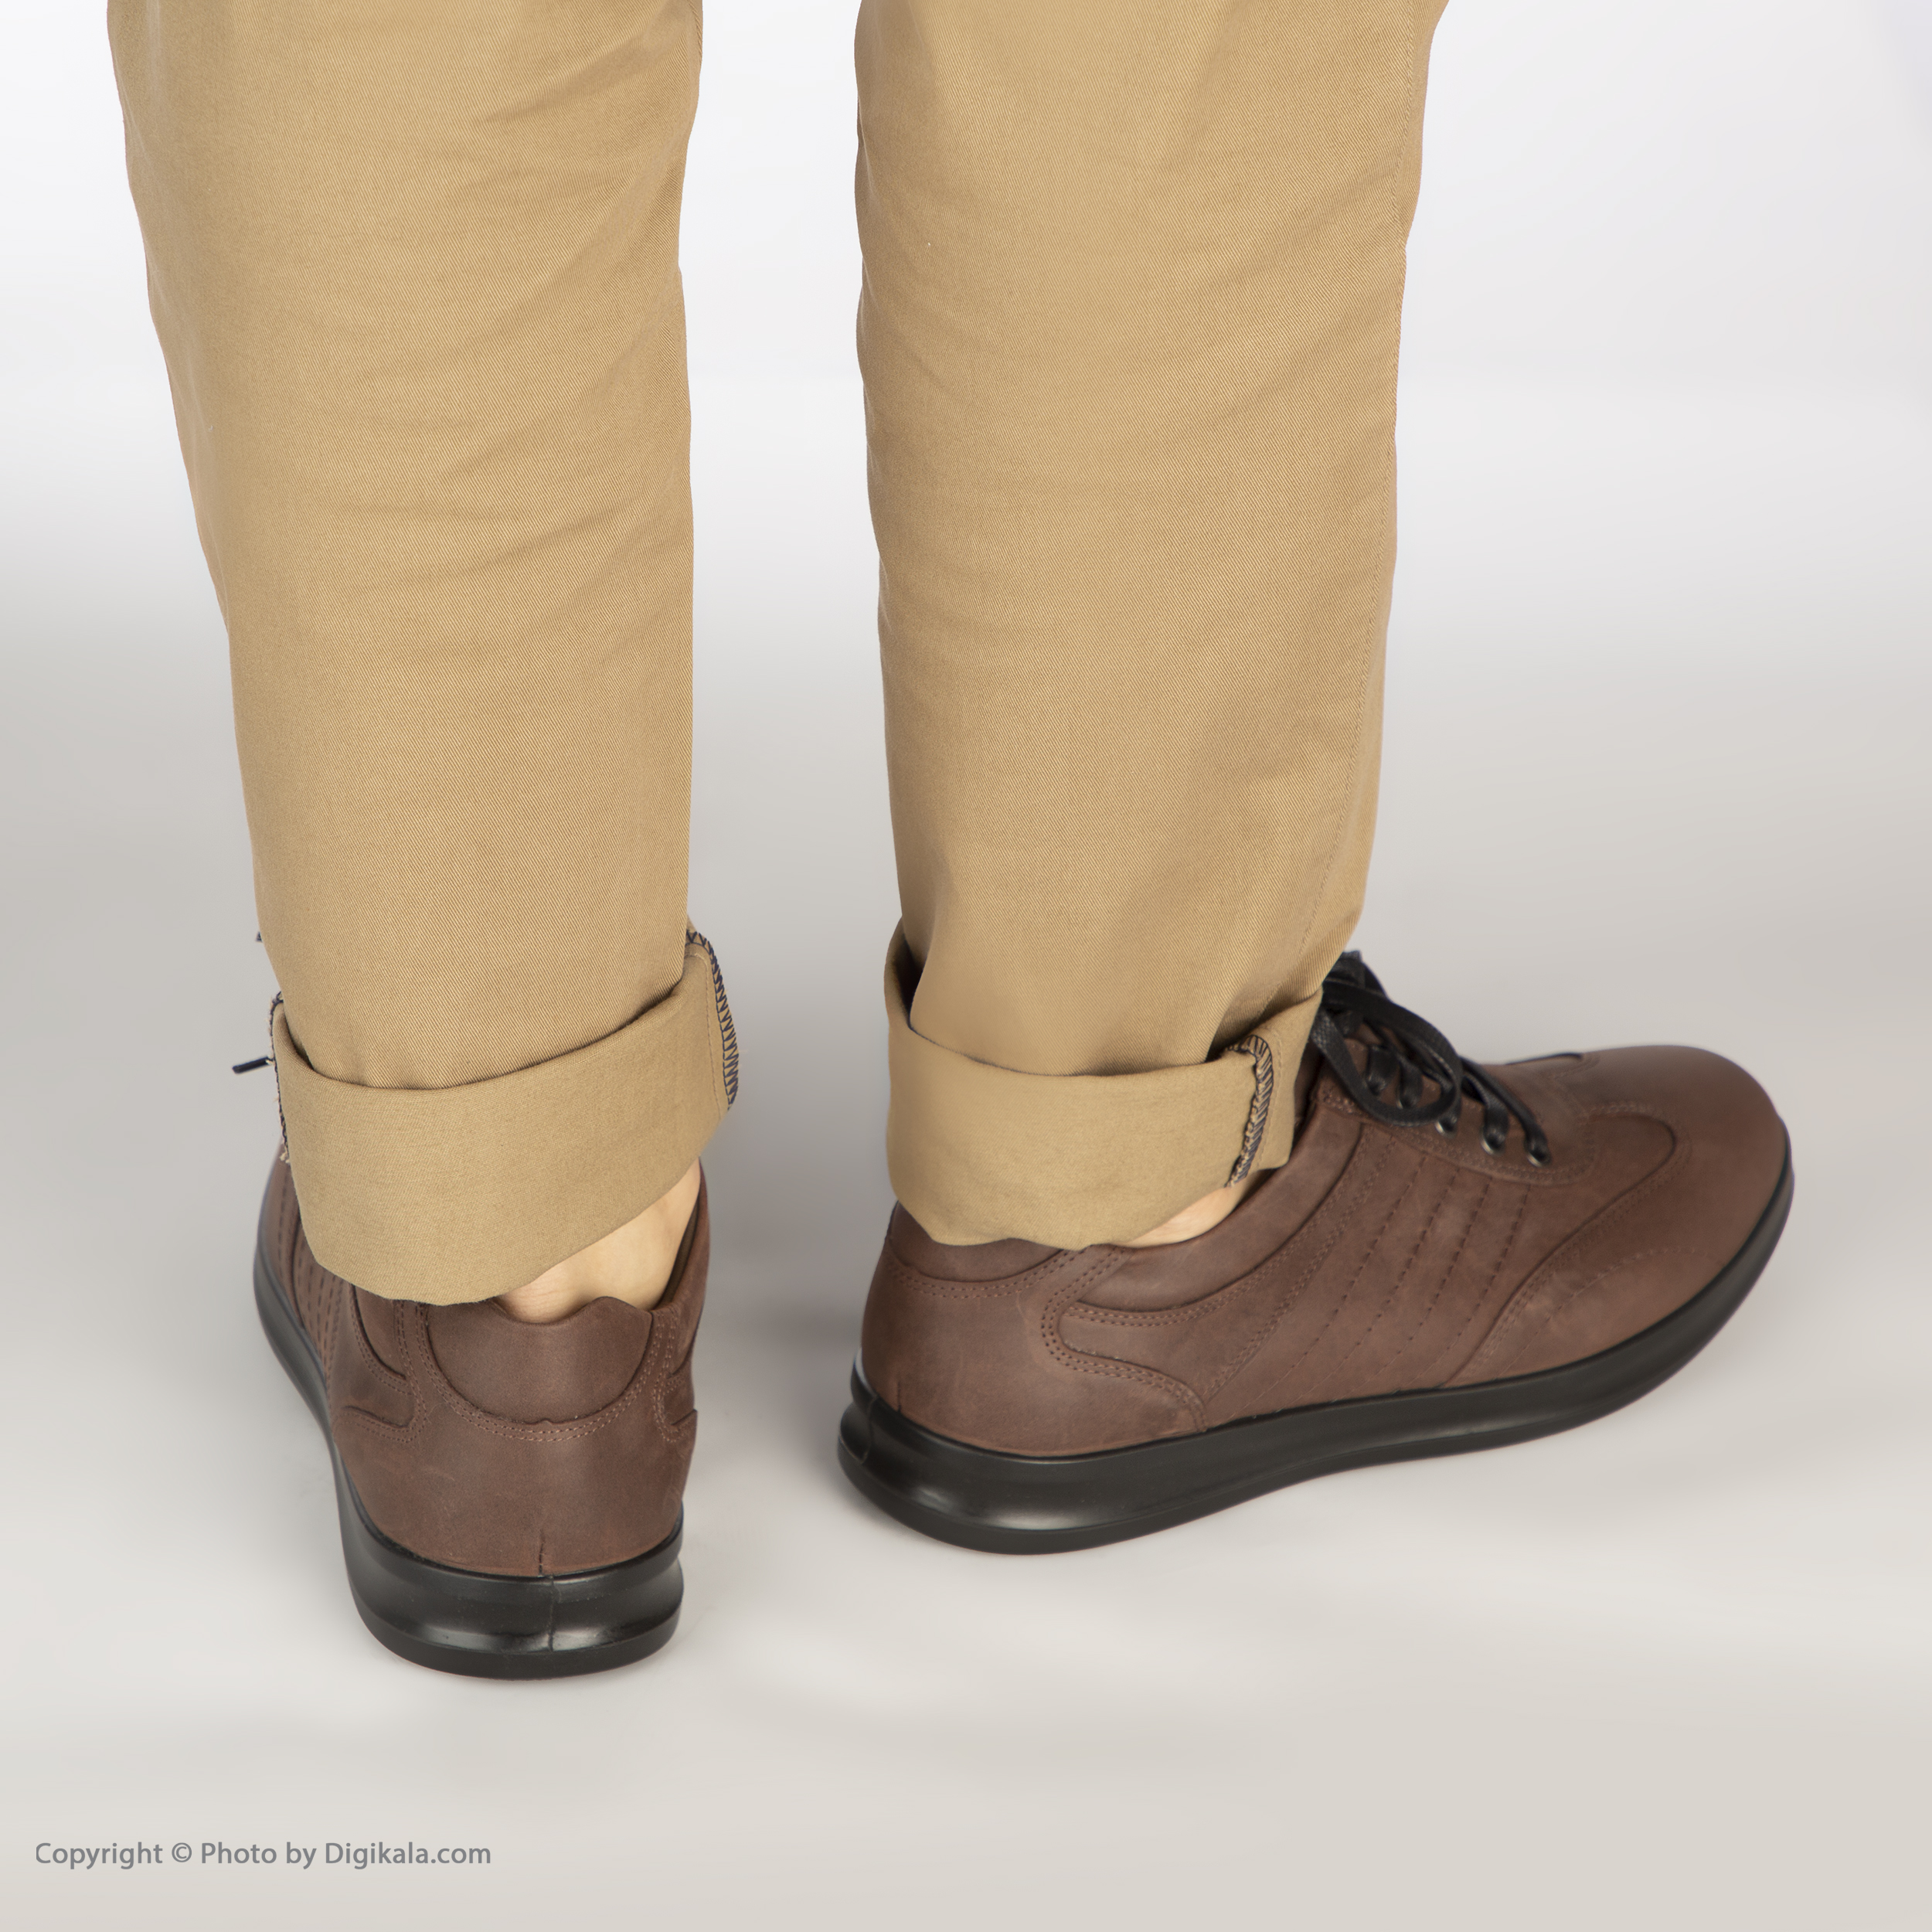 کفش روزمره مردانه دنیلی مدل 213070311435-Brown